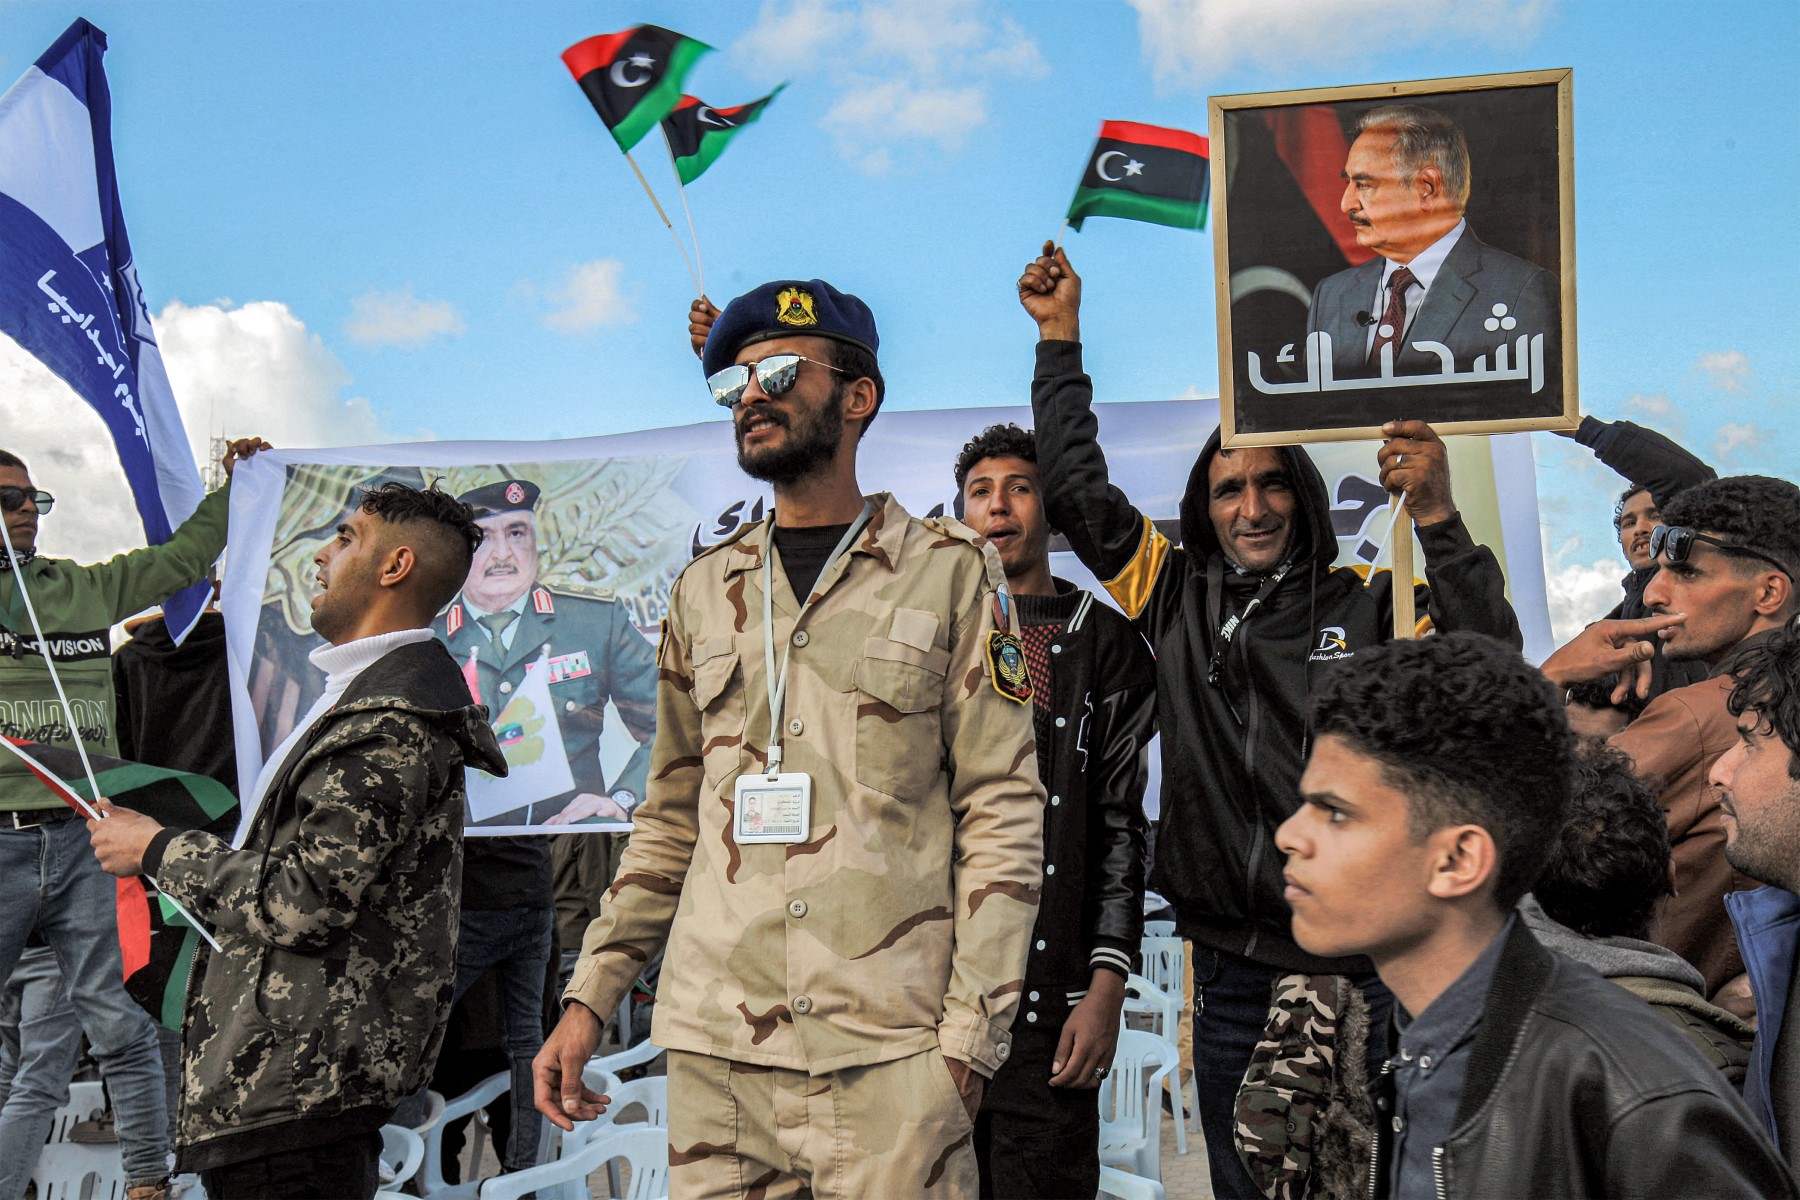 AFP__20221224__3363786__v1__Preview__LibyaPoliticsIndependenceAnniversary.jpg